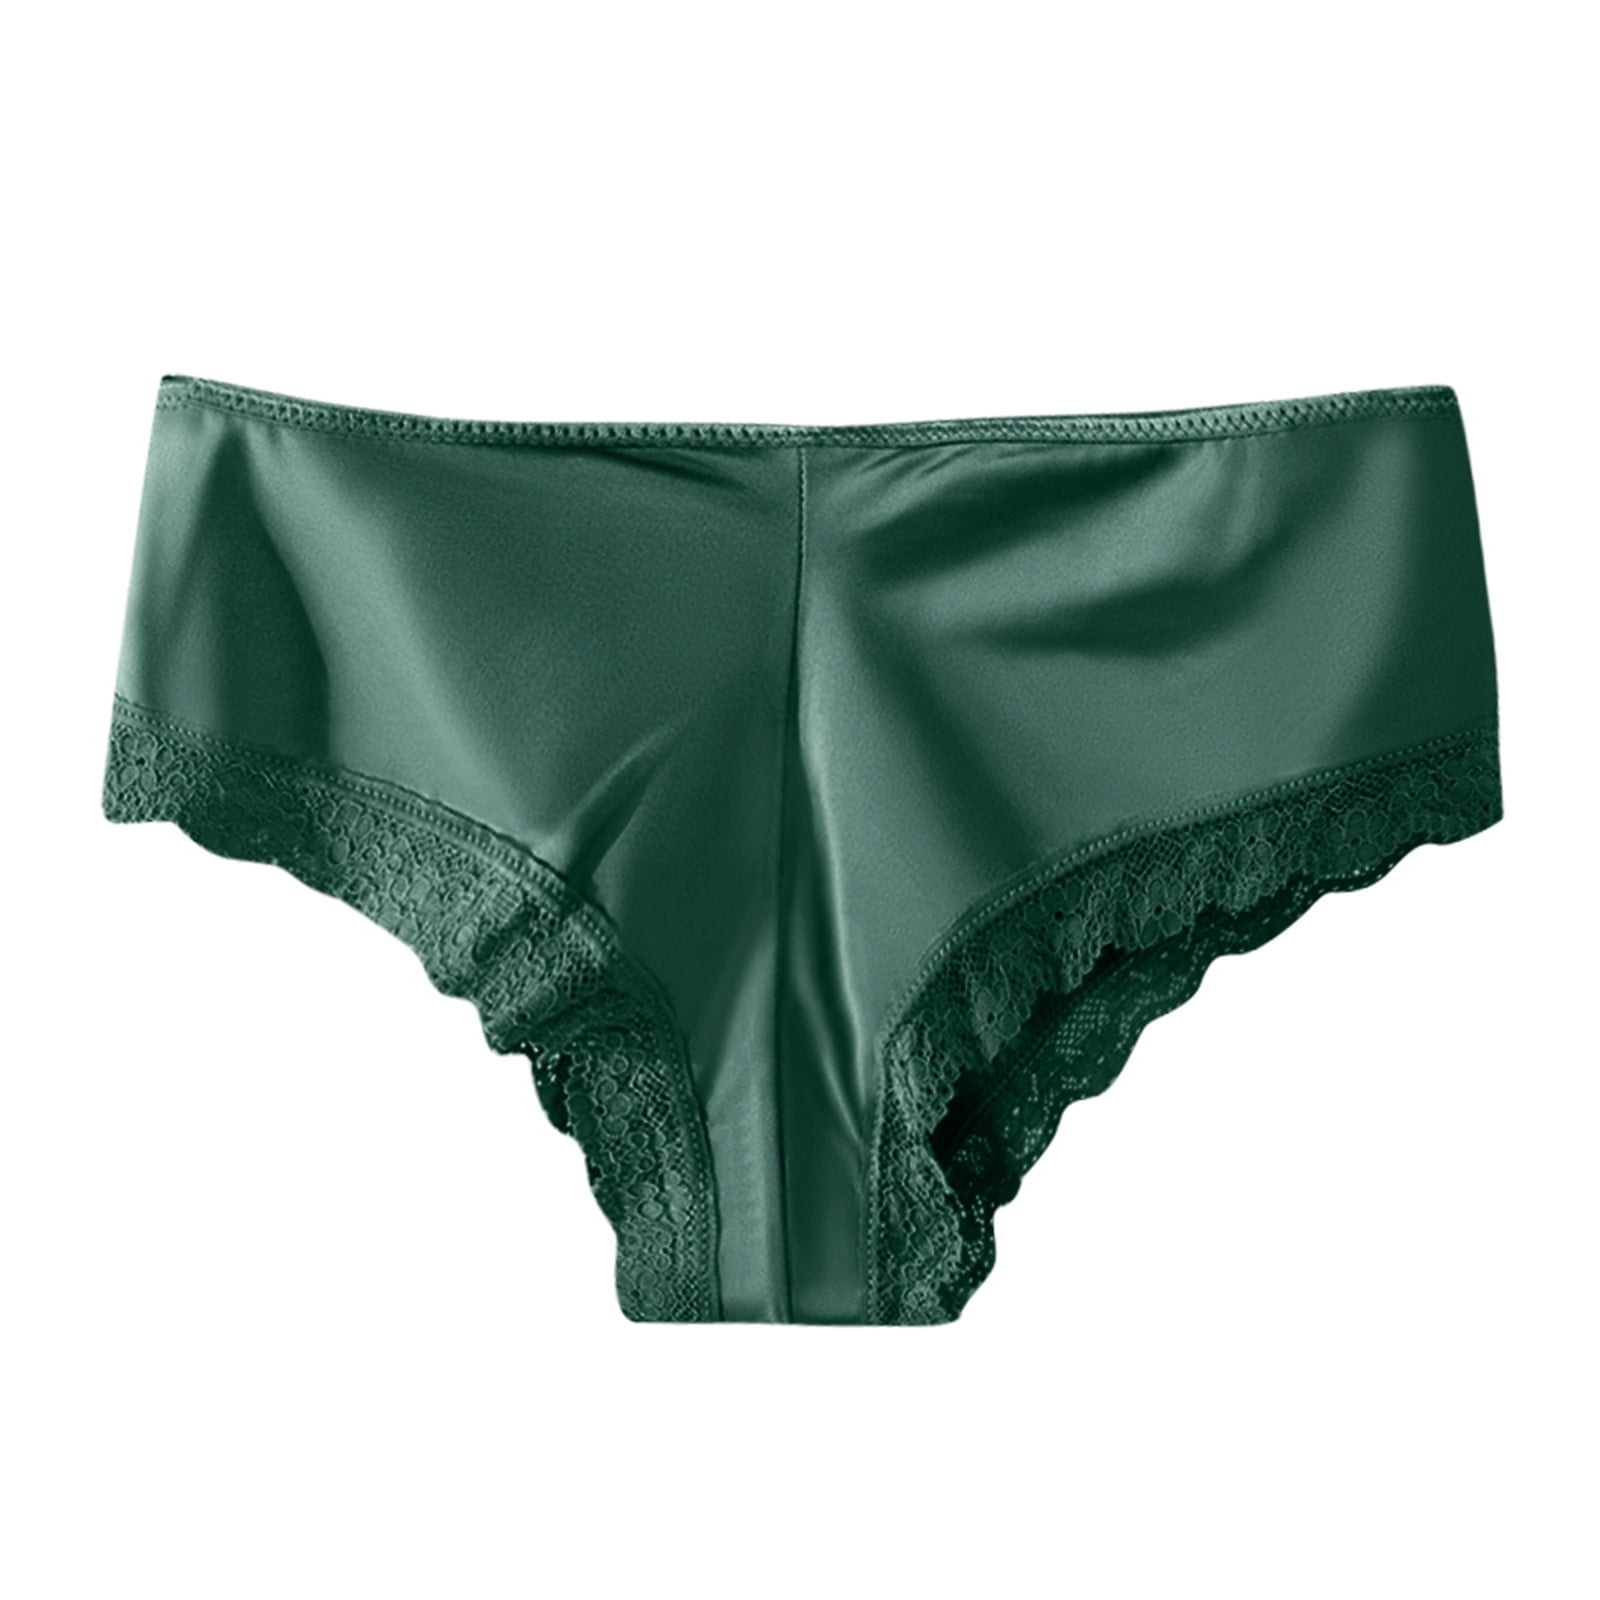 light green, XL) Women Elastic Underwear Girl Cotton Briefs Breathable  Moisture Wicking Panty Daily Underwear on OnBuy